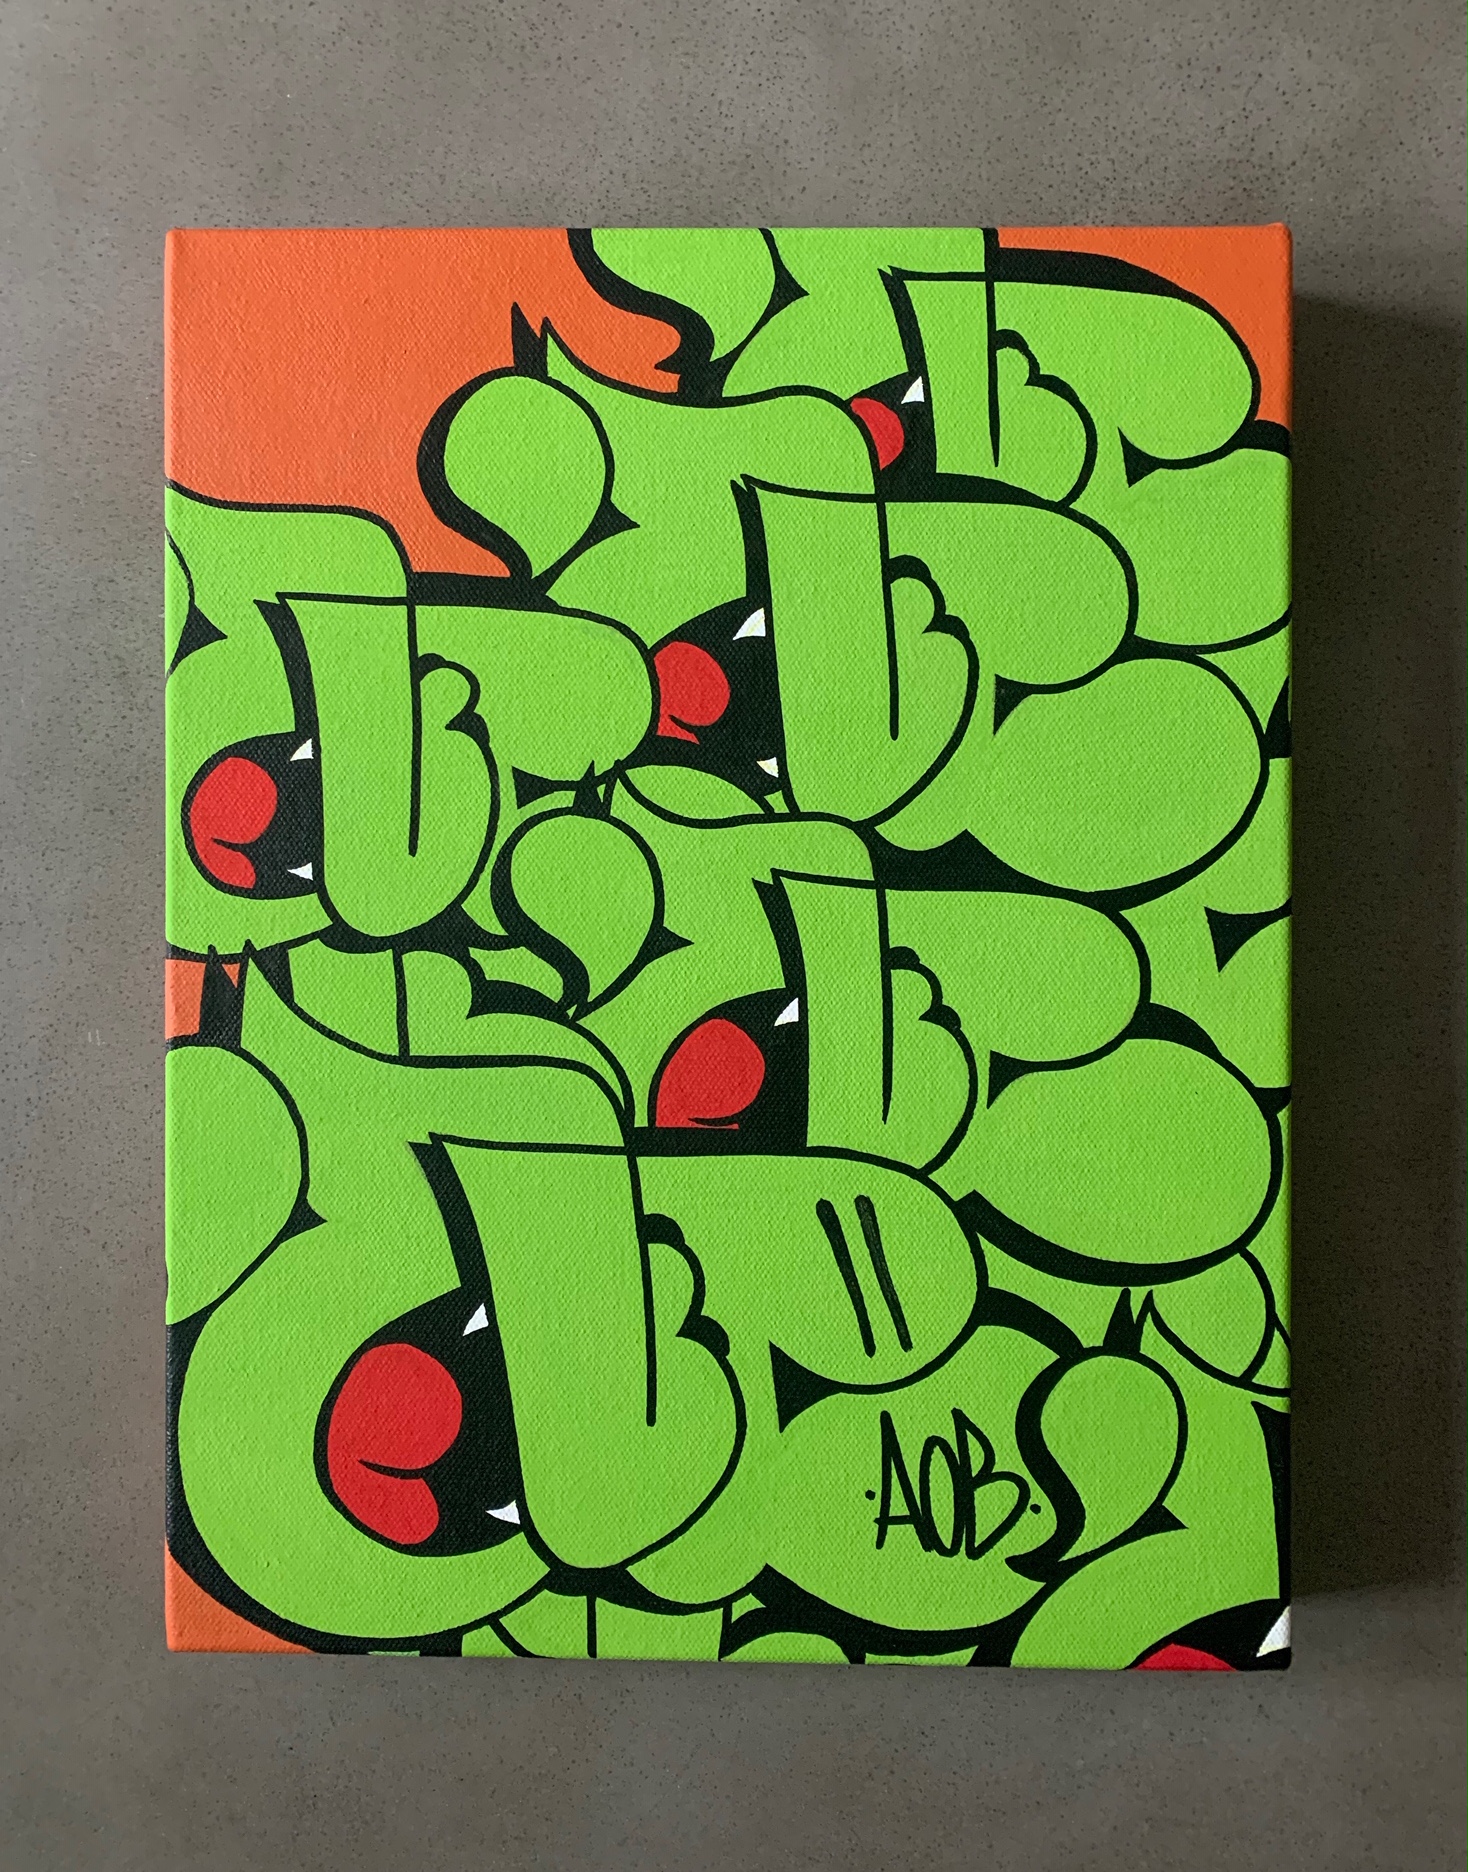 11x14' Nover Green Throwie Canvas, 2019.